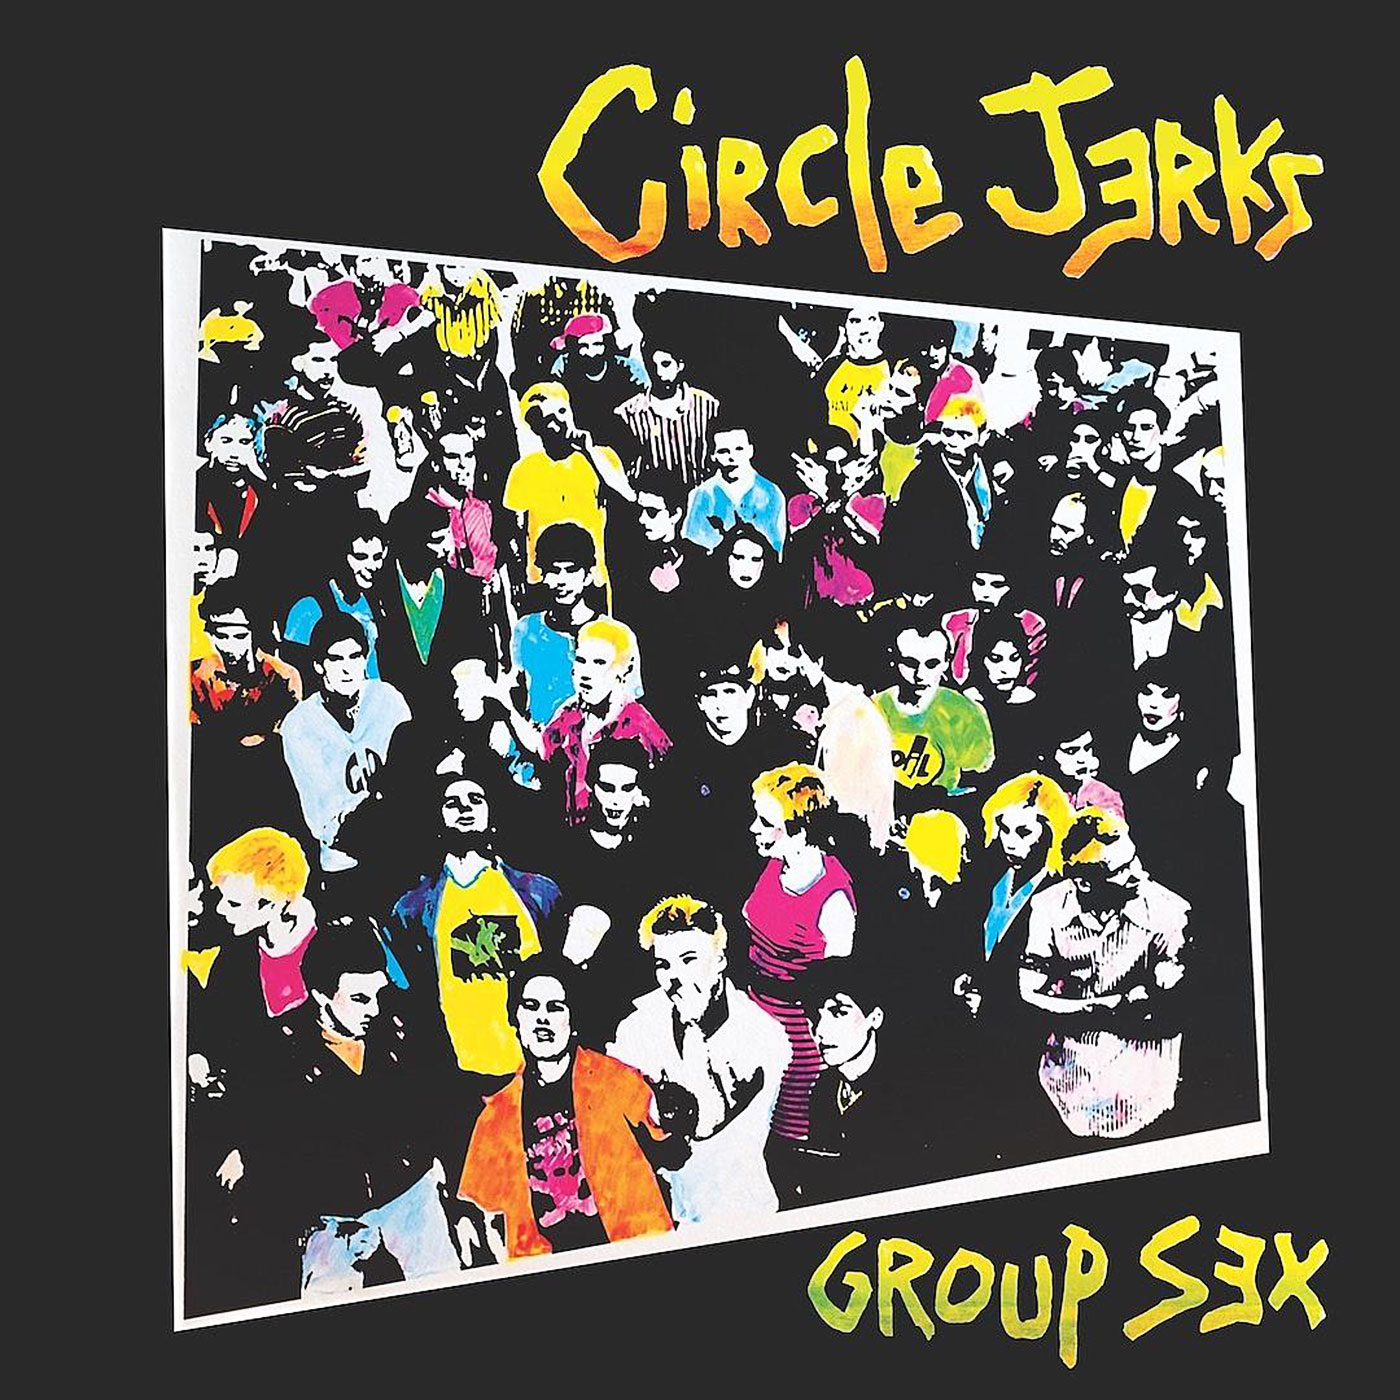 466 Circle Jerks – Group Sex